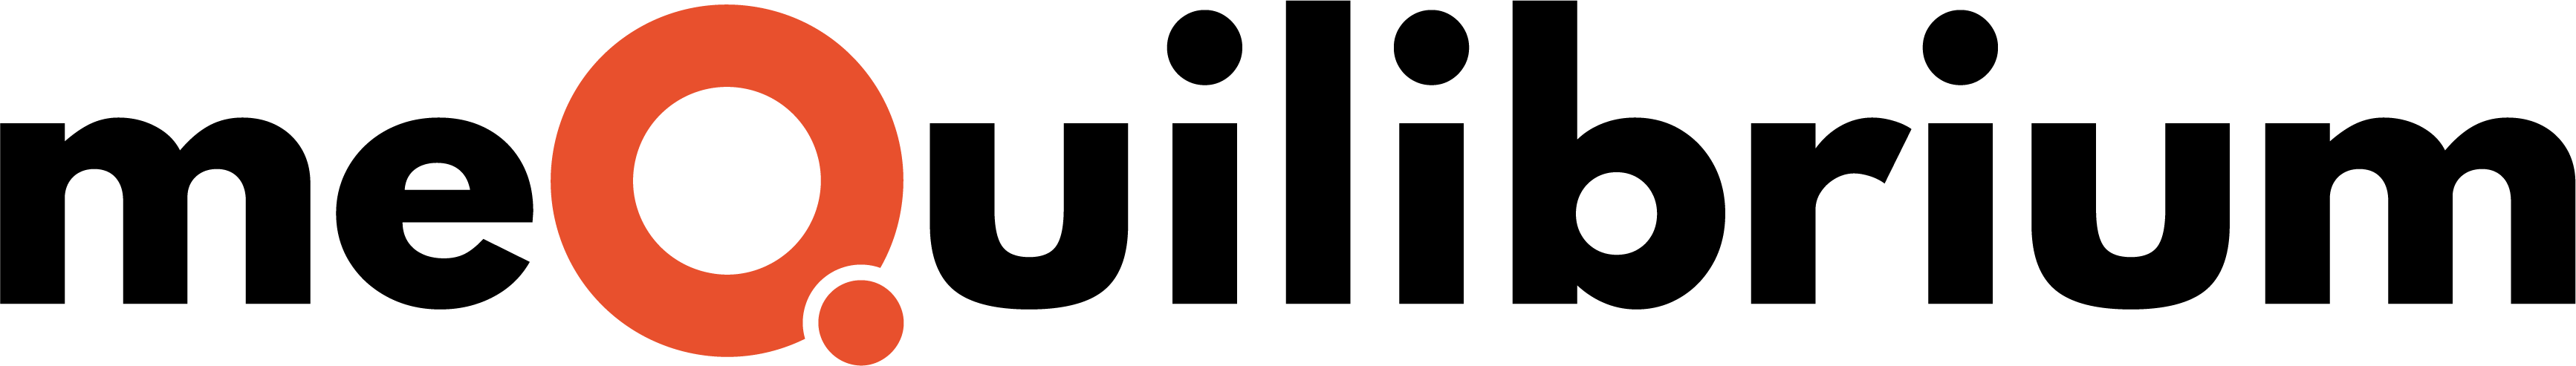 meQ Long logo